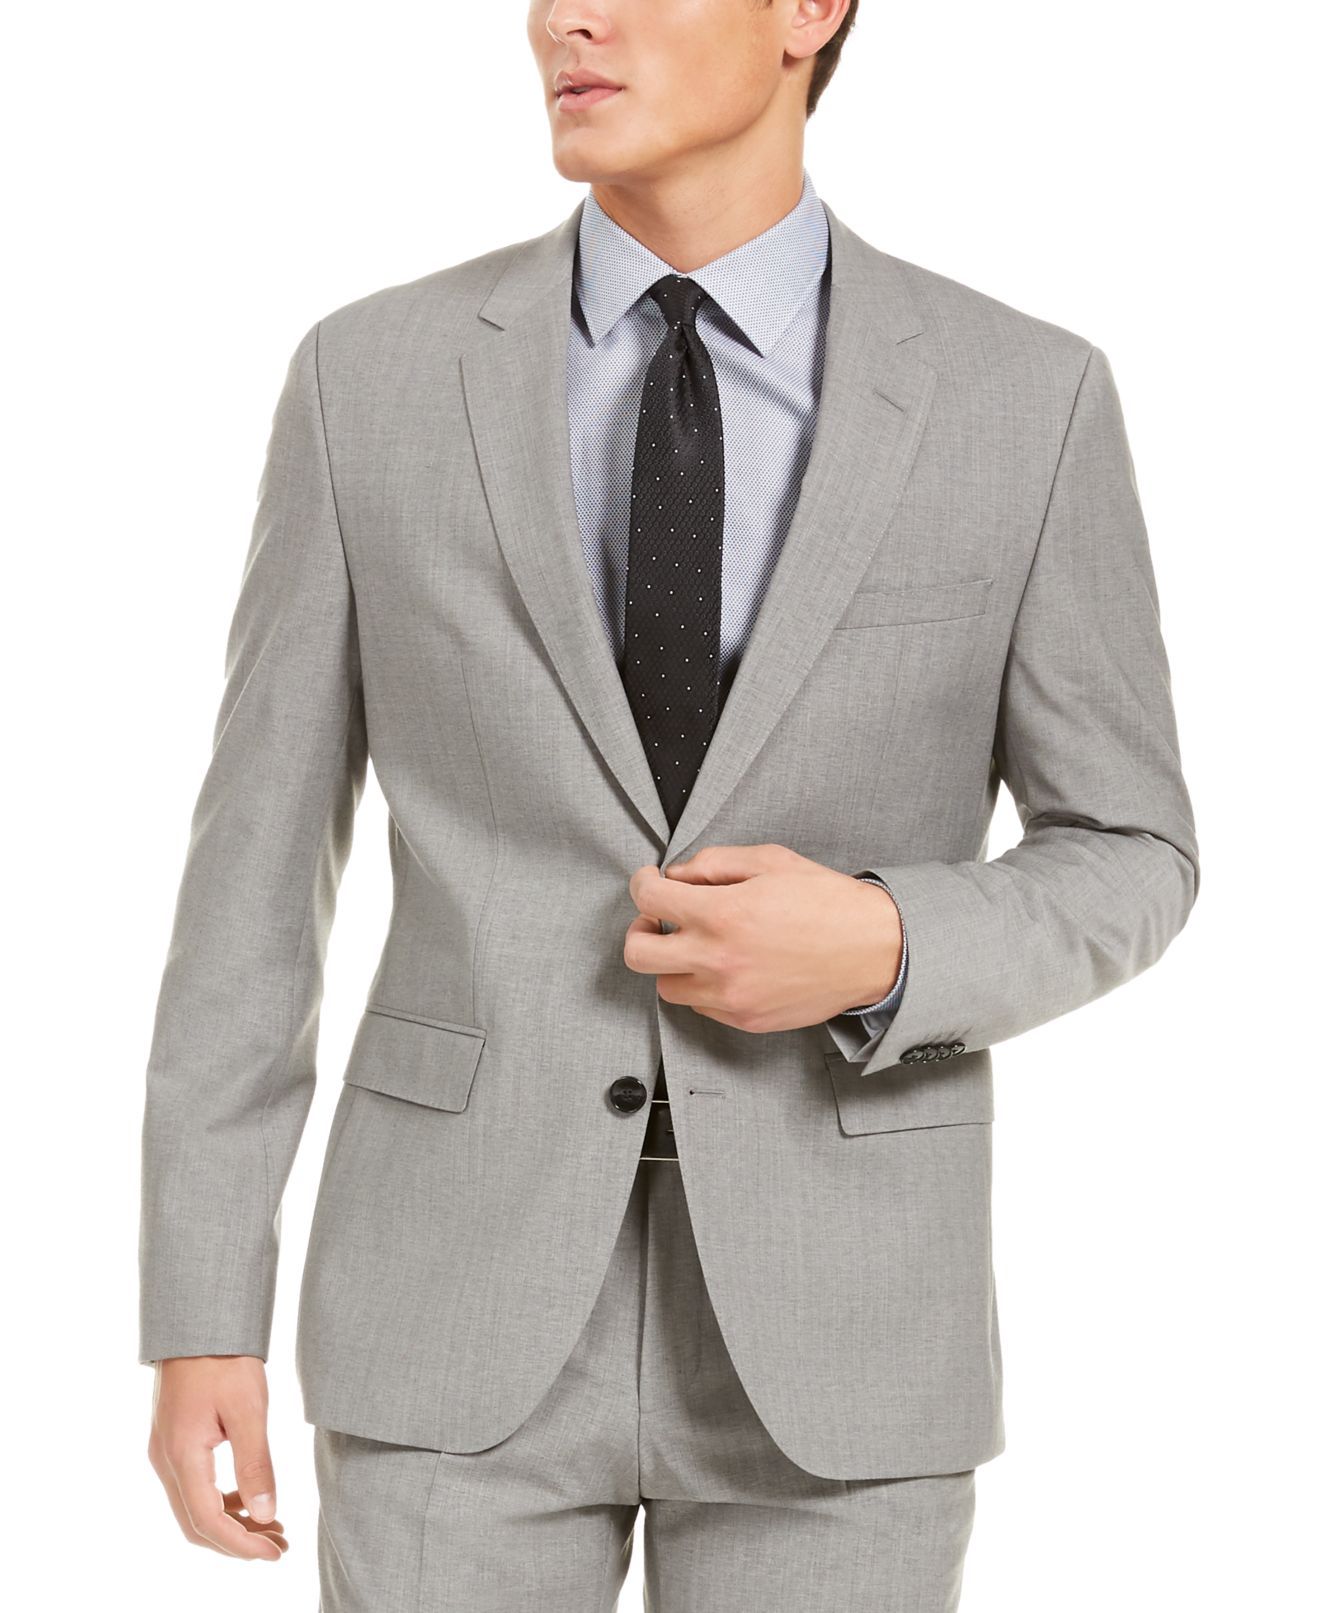 Color: Grays Size Type: Regular Type: Blazer Jacket Size: 48 Jacket Length: Regular Material: Wool Blends Pockets Top - Exterior: 3 Pockets Pockets Top - Interior: 2 Pockets Pockets Bottom: None